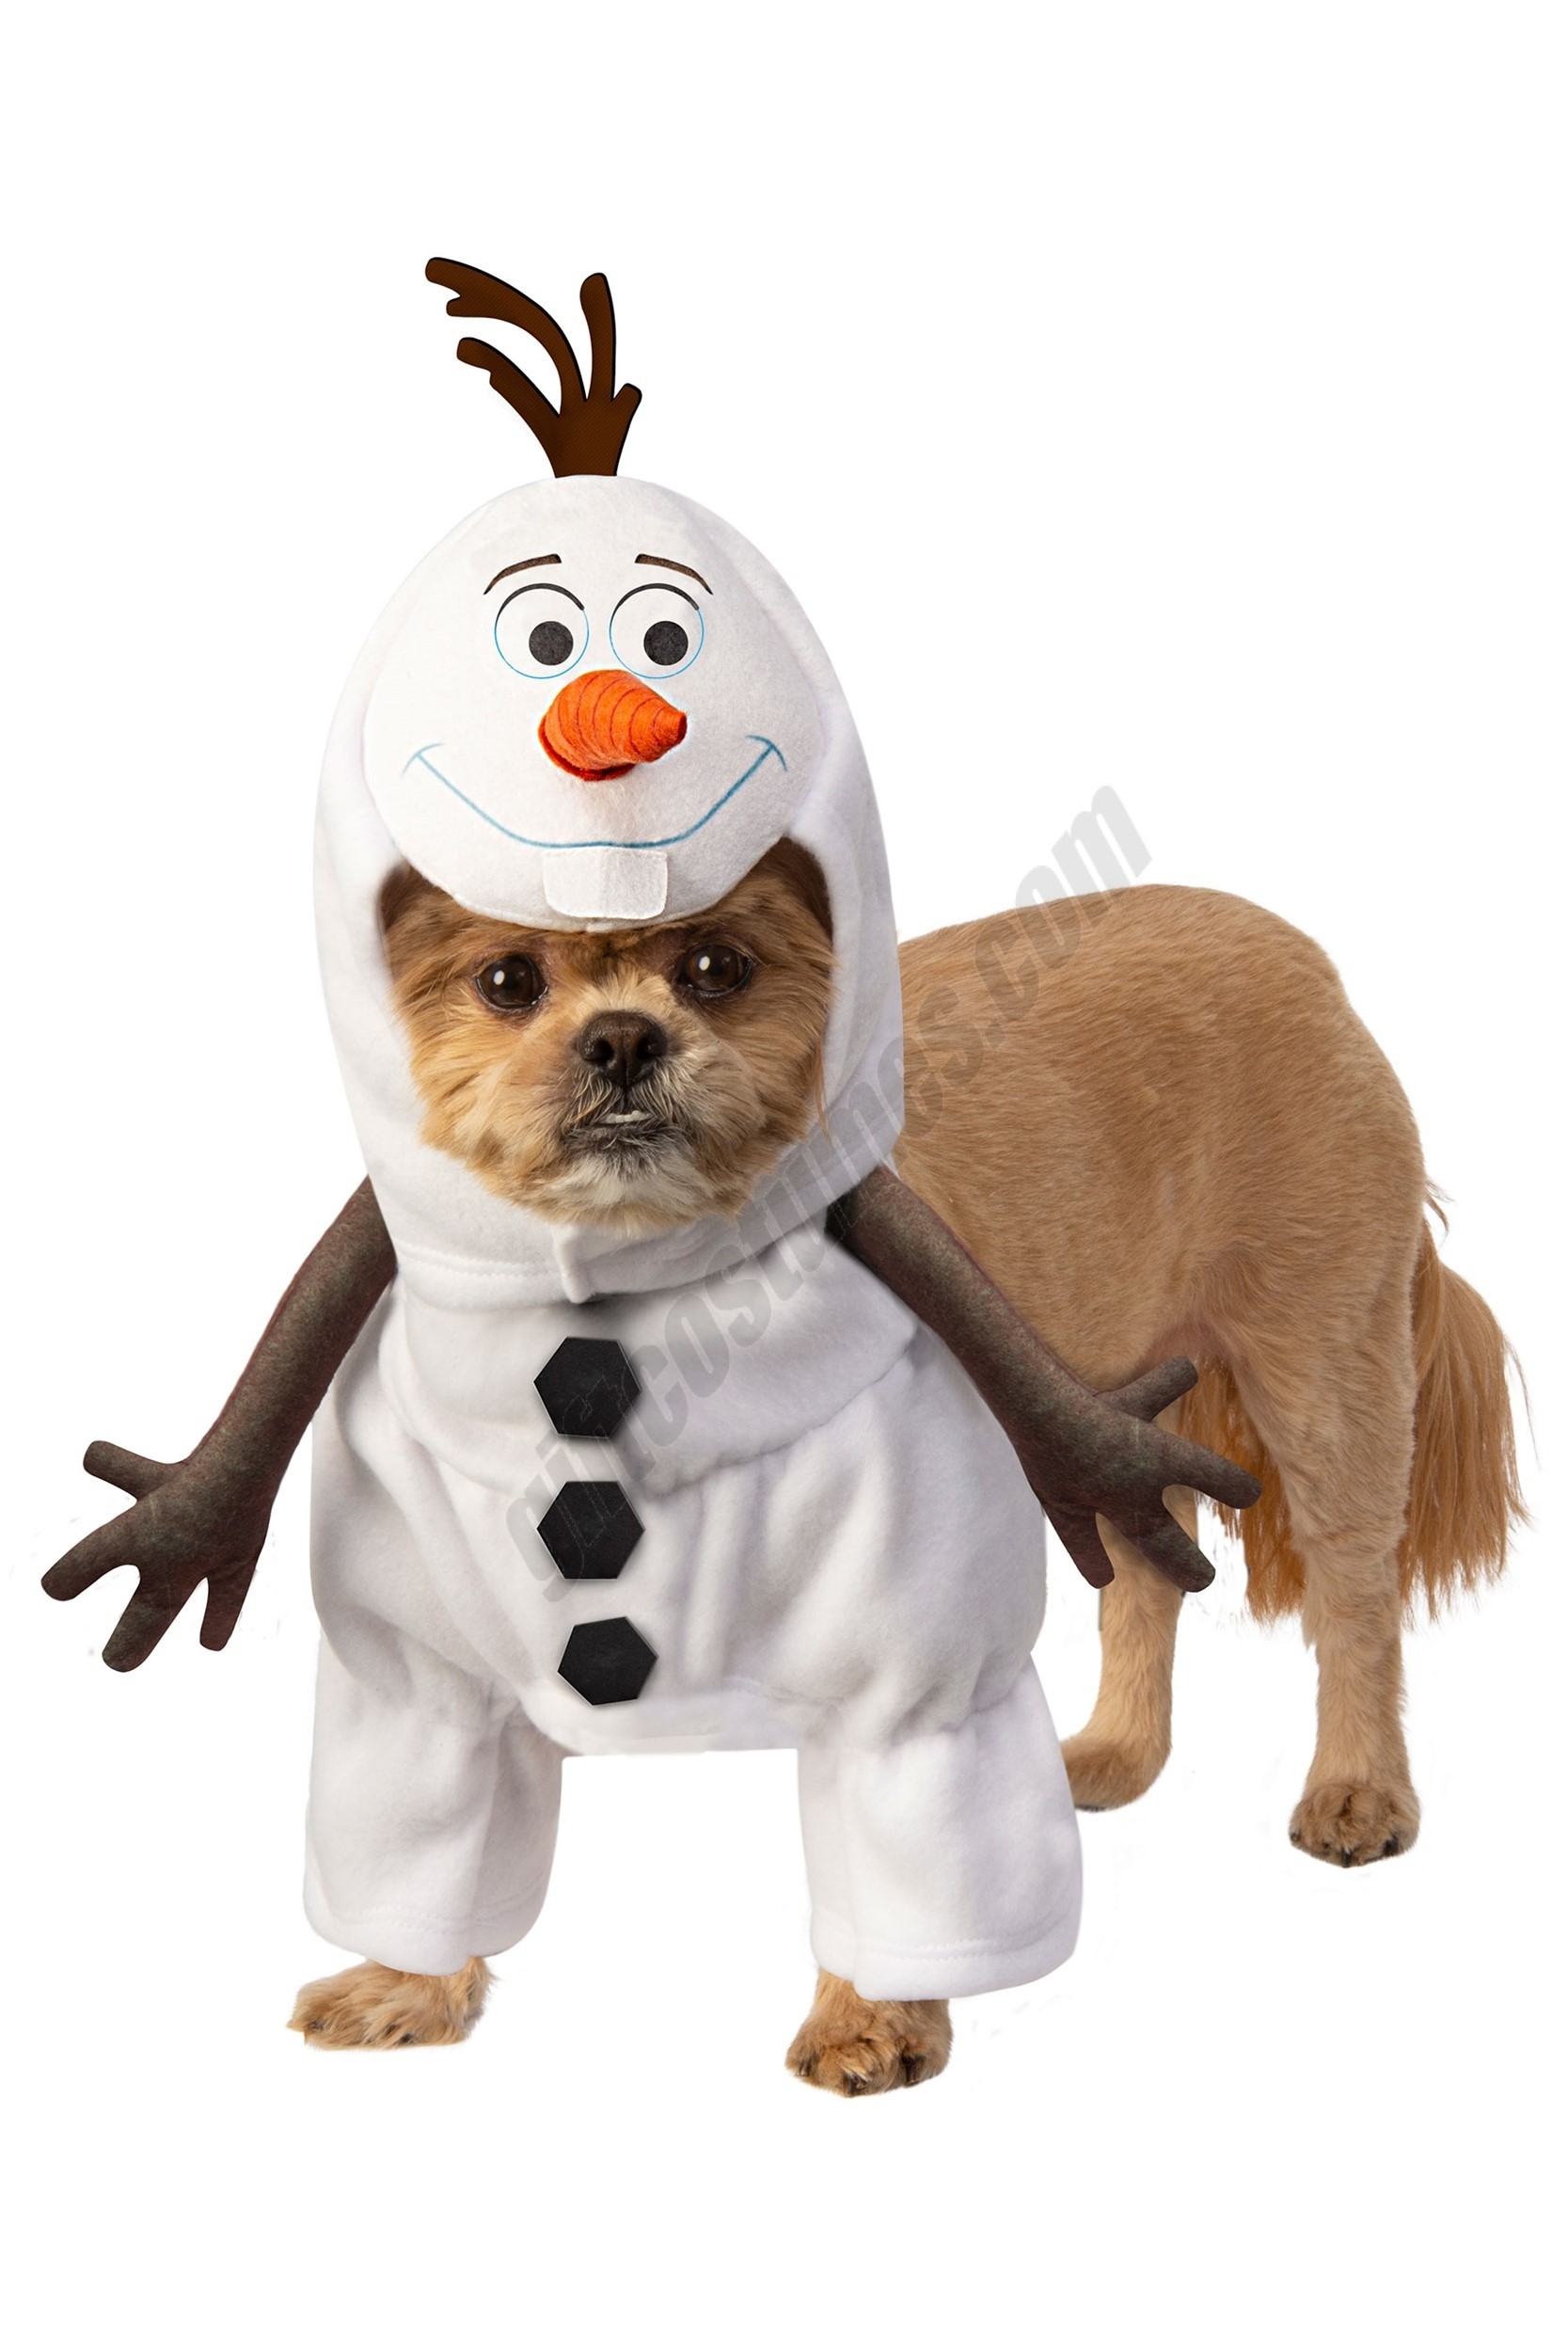 Frozen Olaf Pet Costume Promotions - Frozen Olaf Pet Costume Promotions